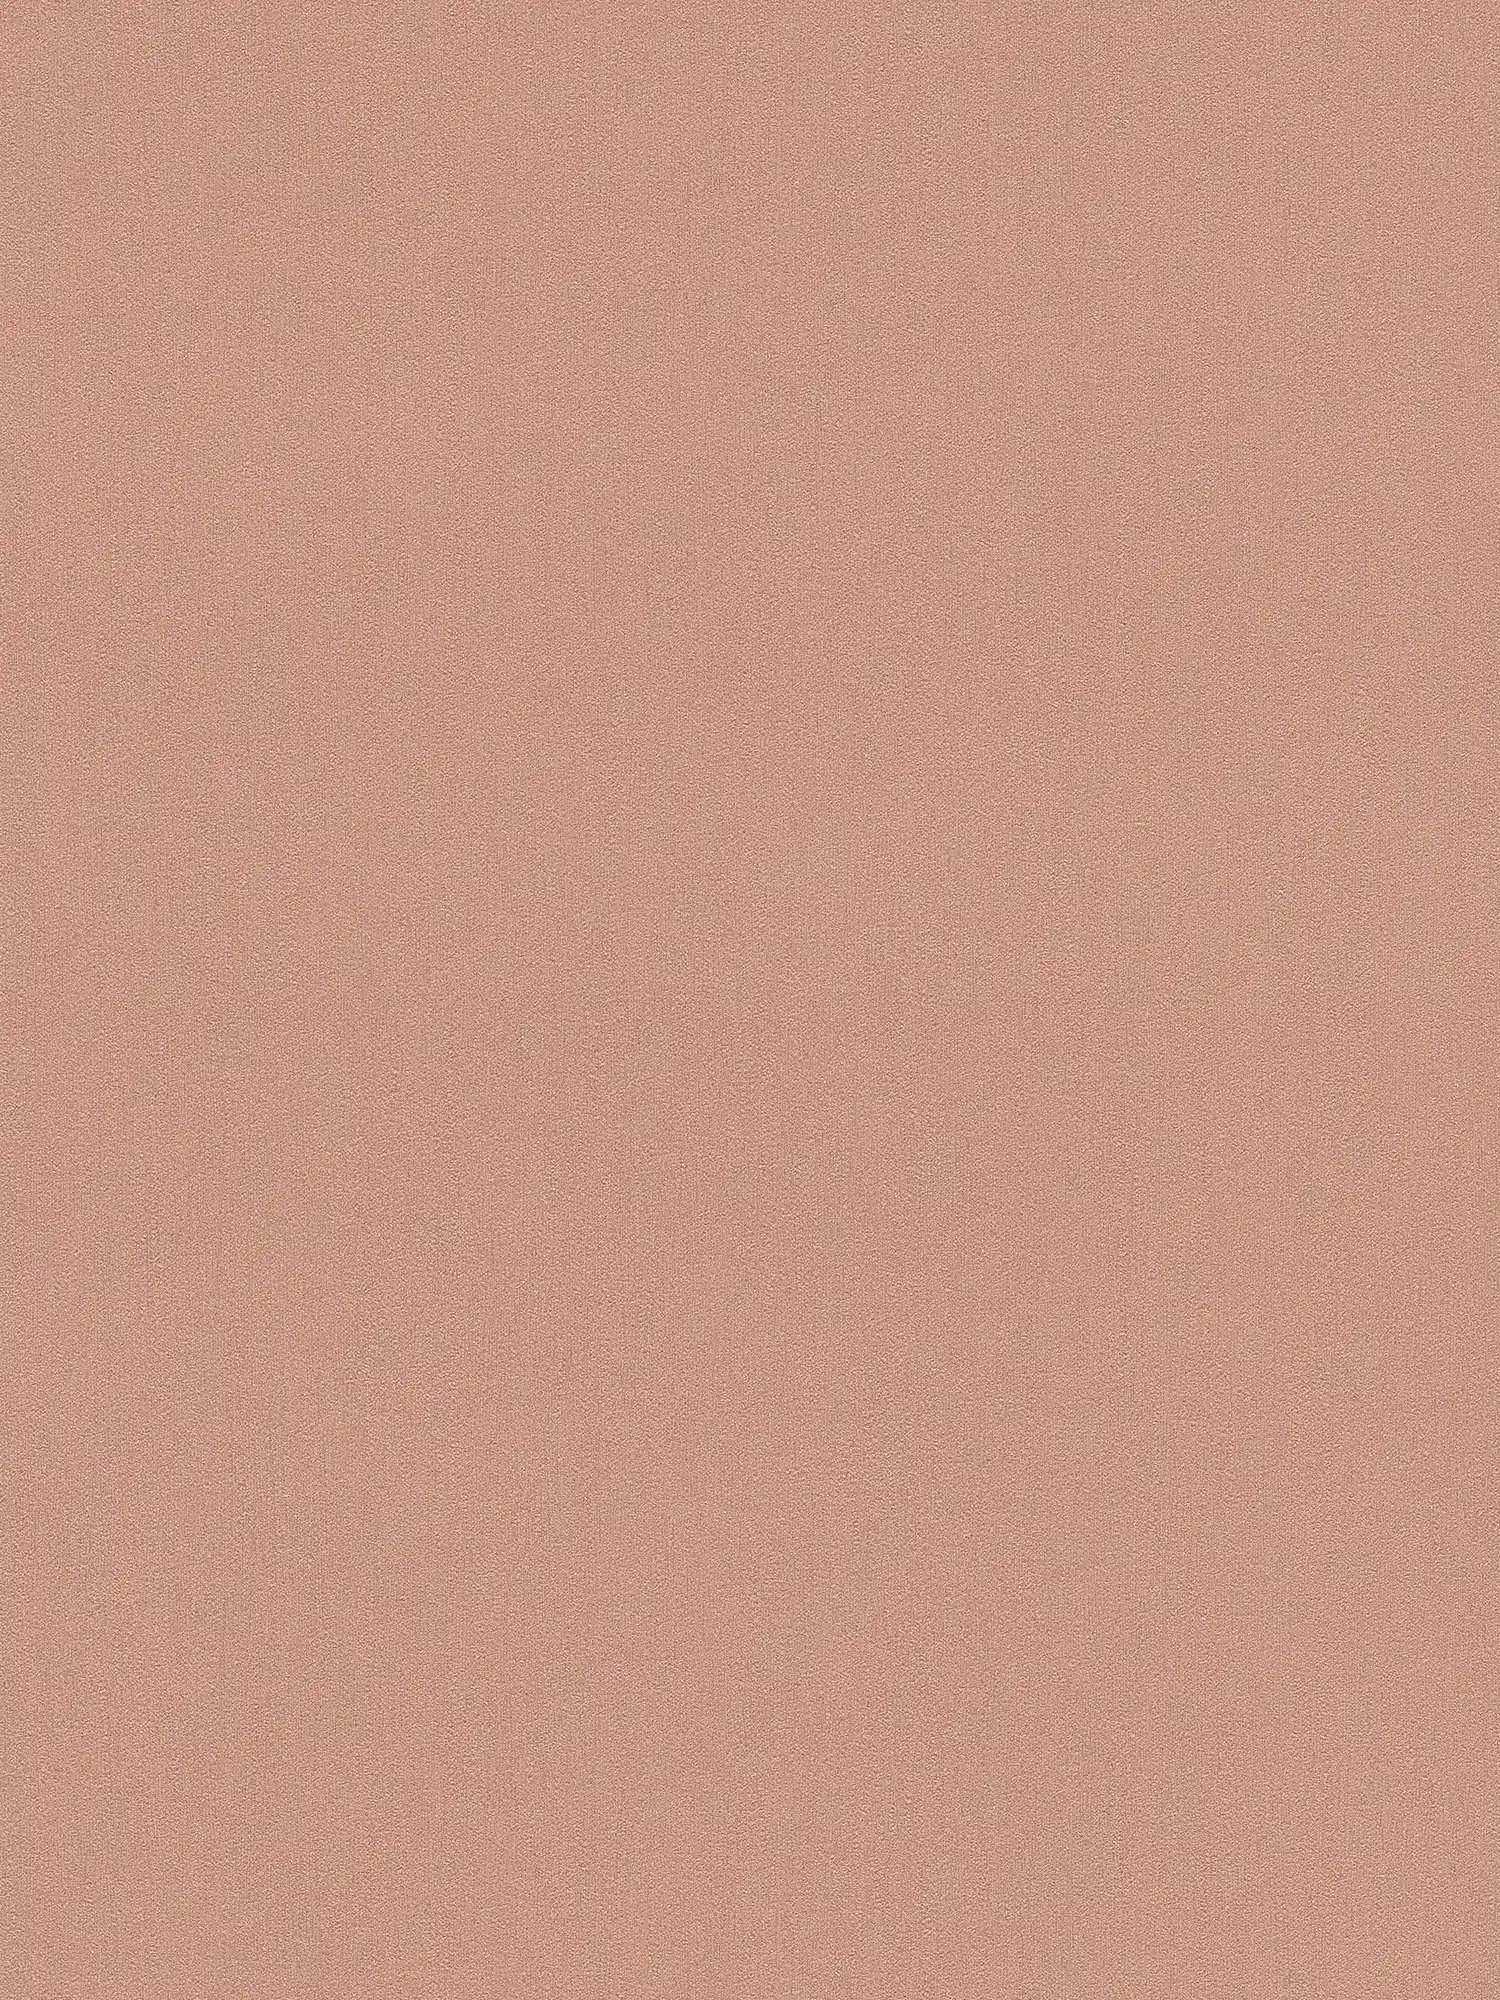 Karl LAGERFELD non-woven wallpaper plain & texture - copper
